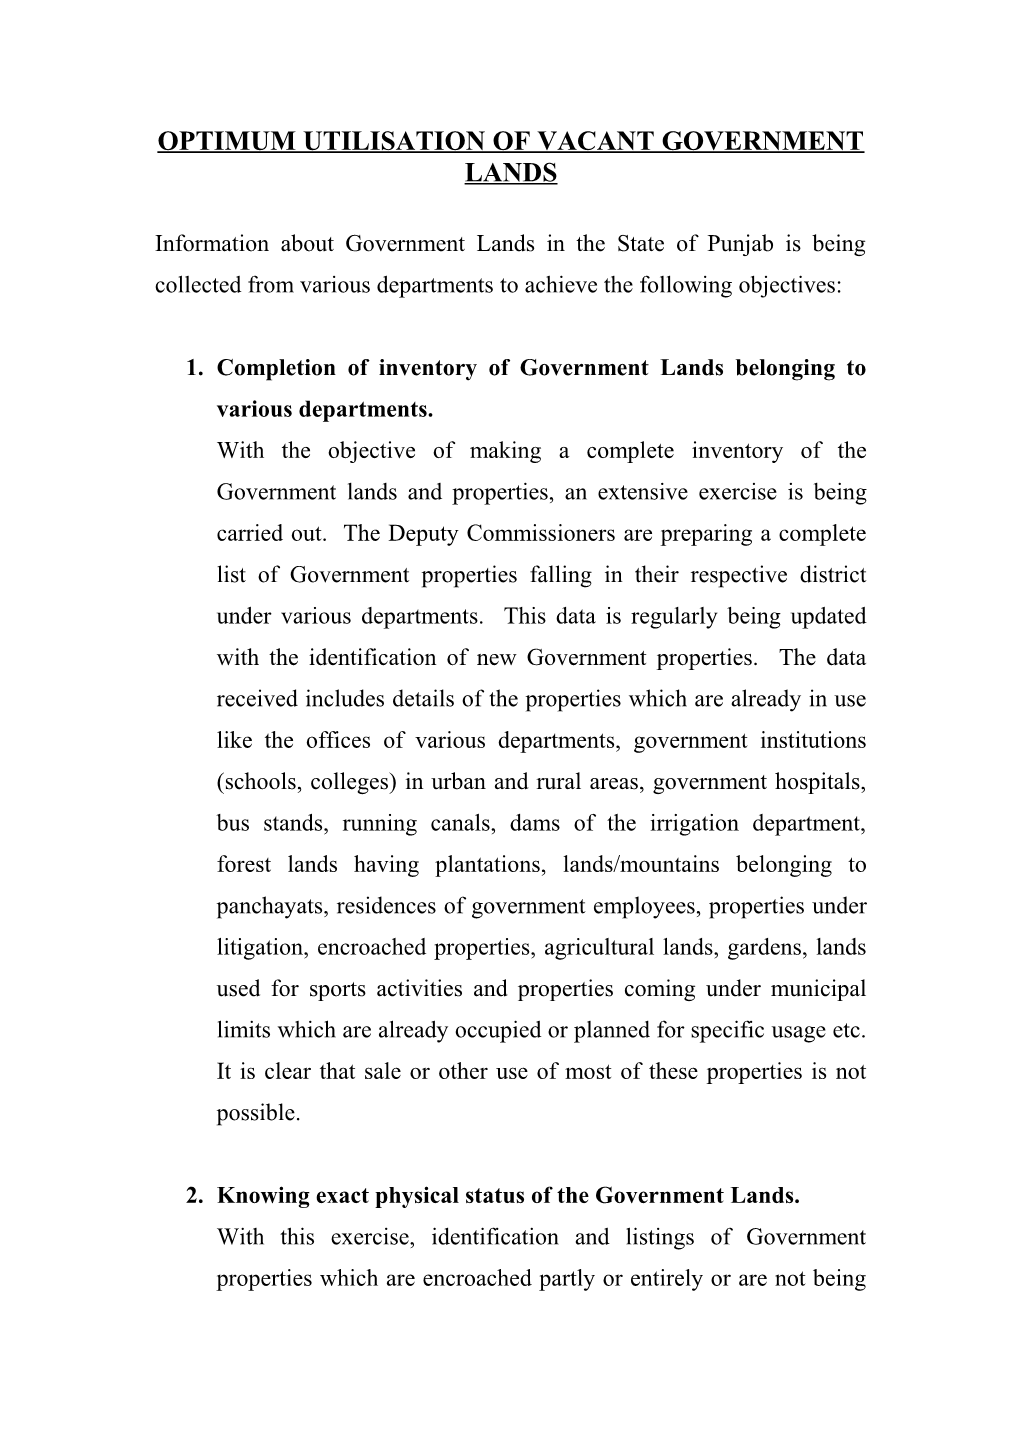 Optimum Utilisation of Government Vacant Land